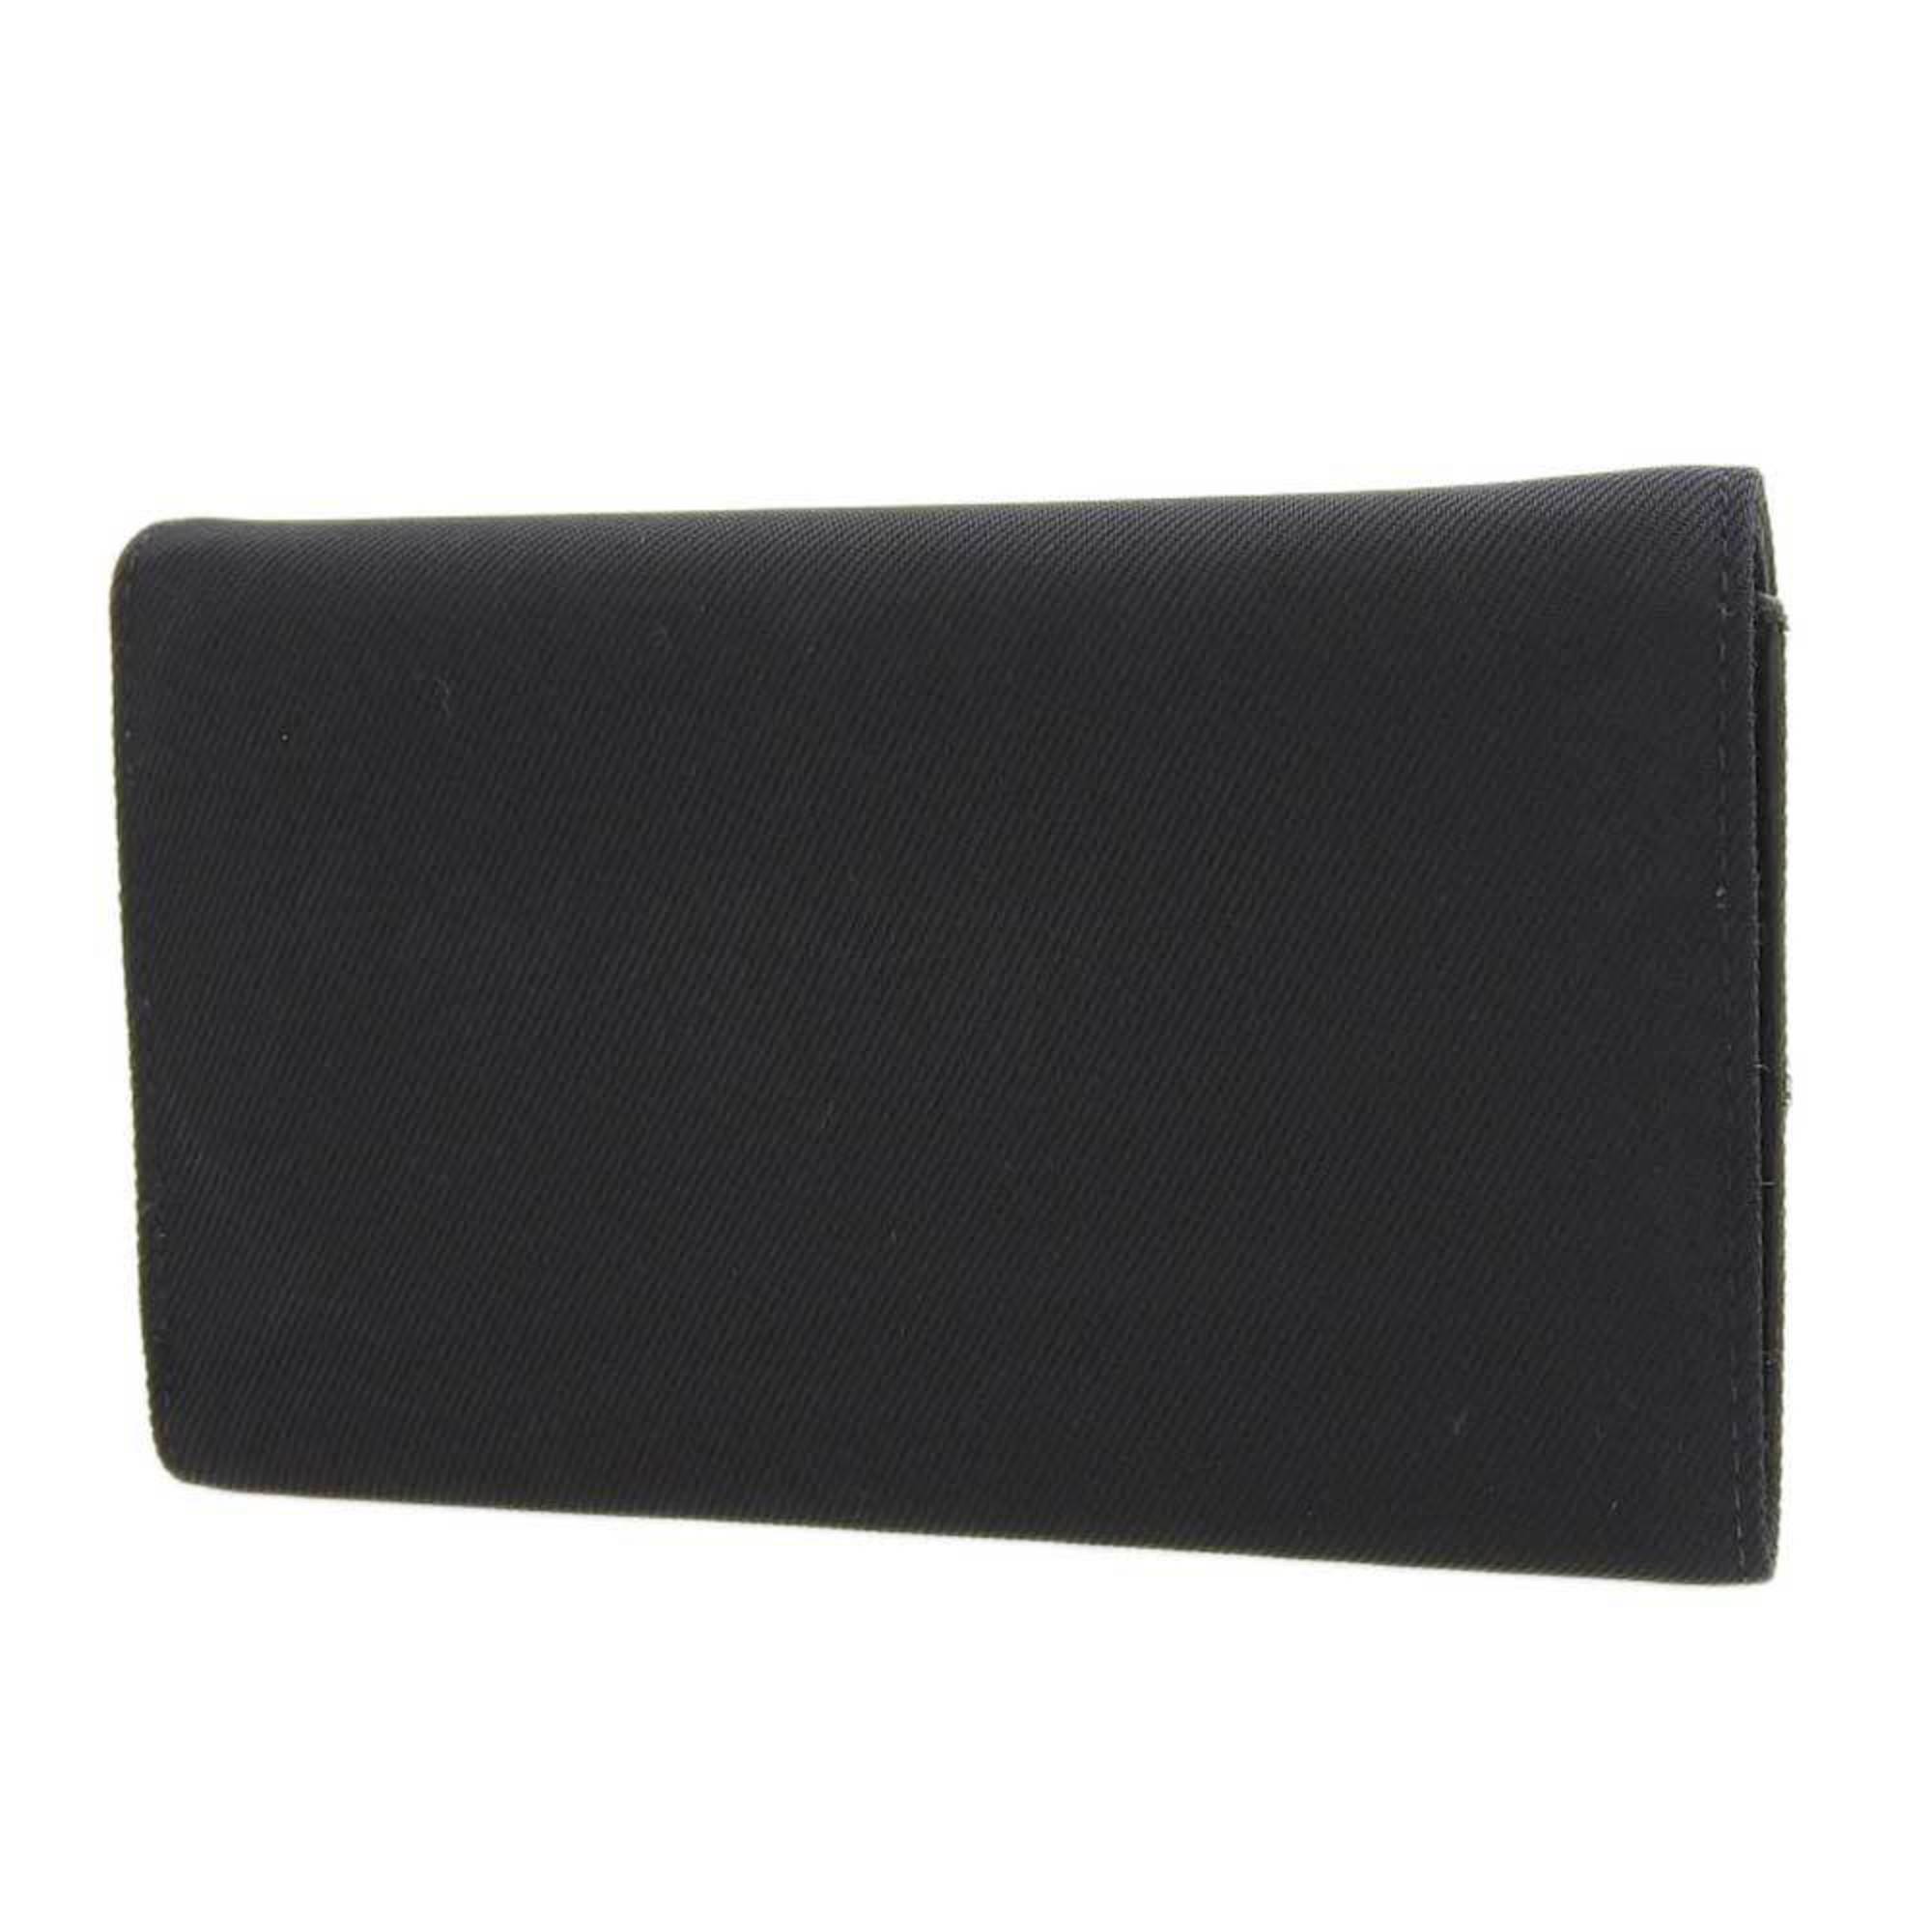 Fendi FENDI logo tri-fold wallet black